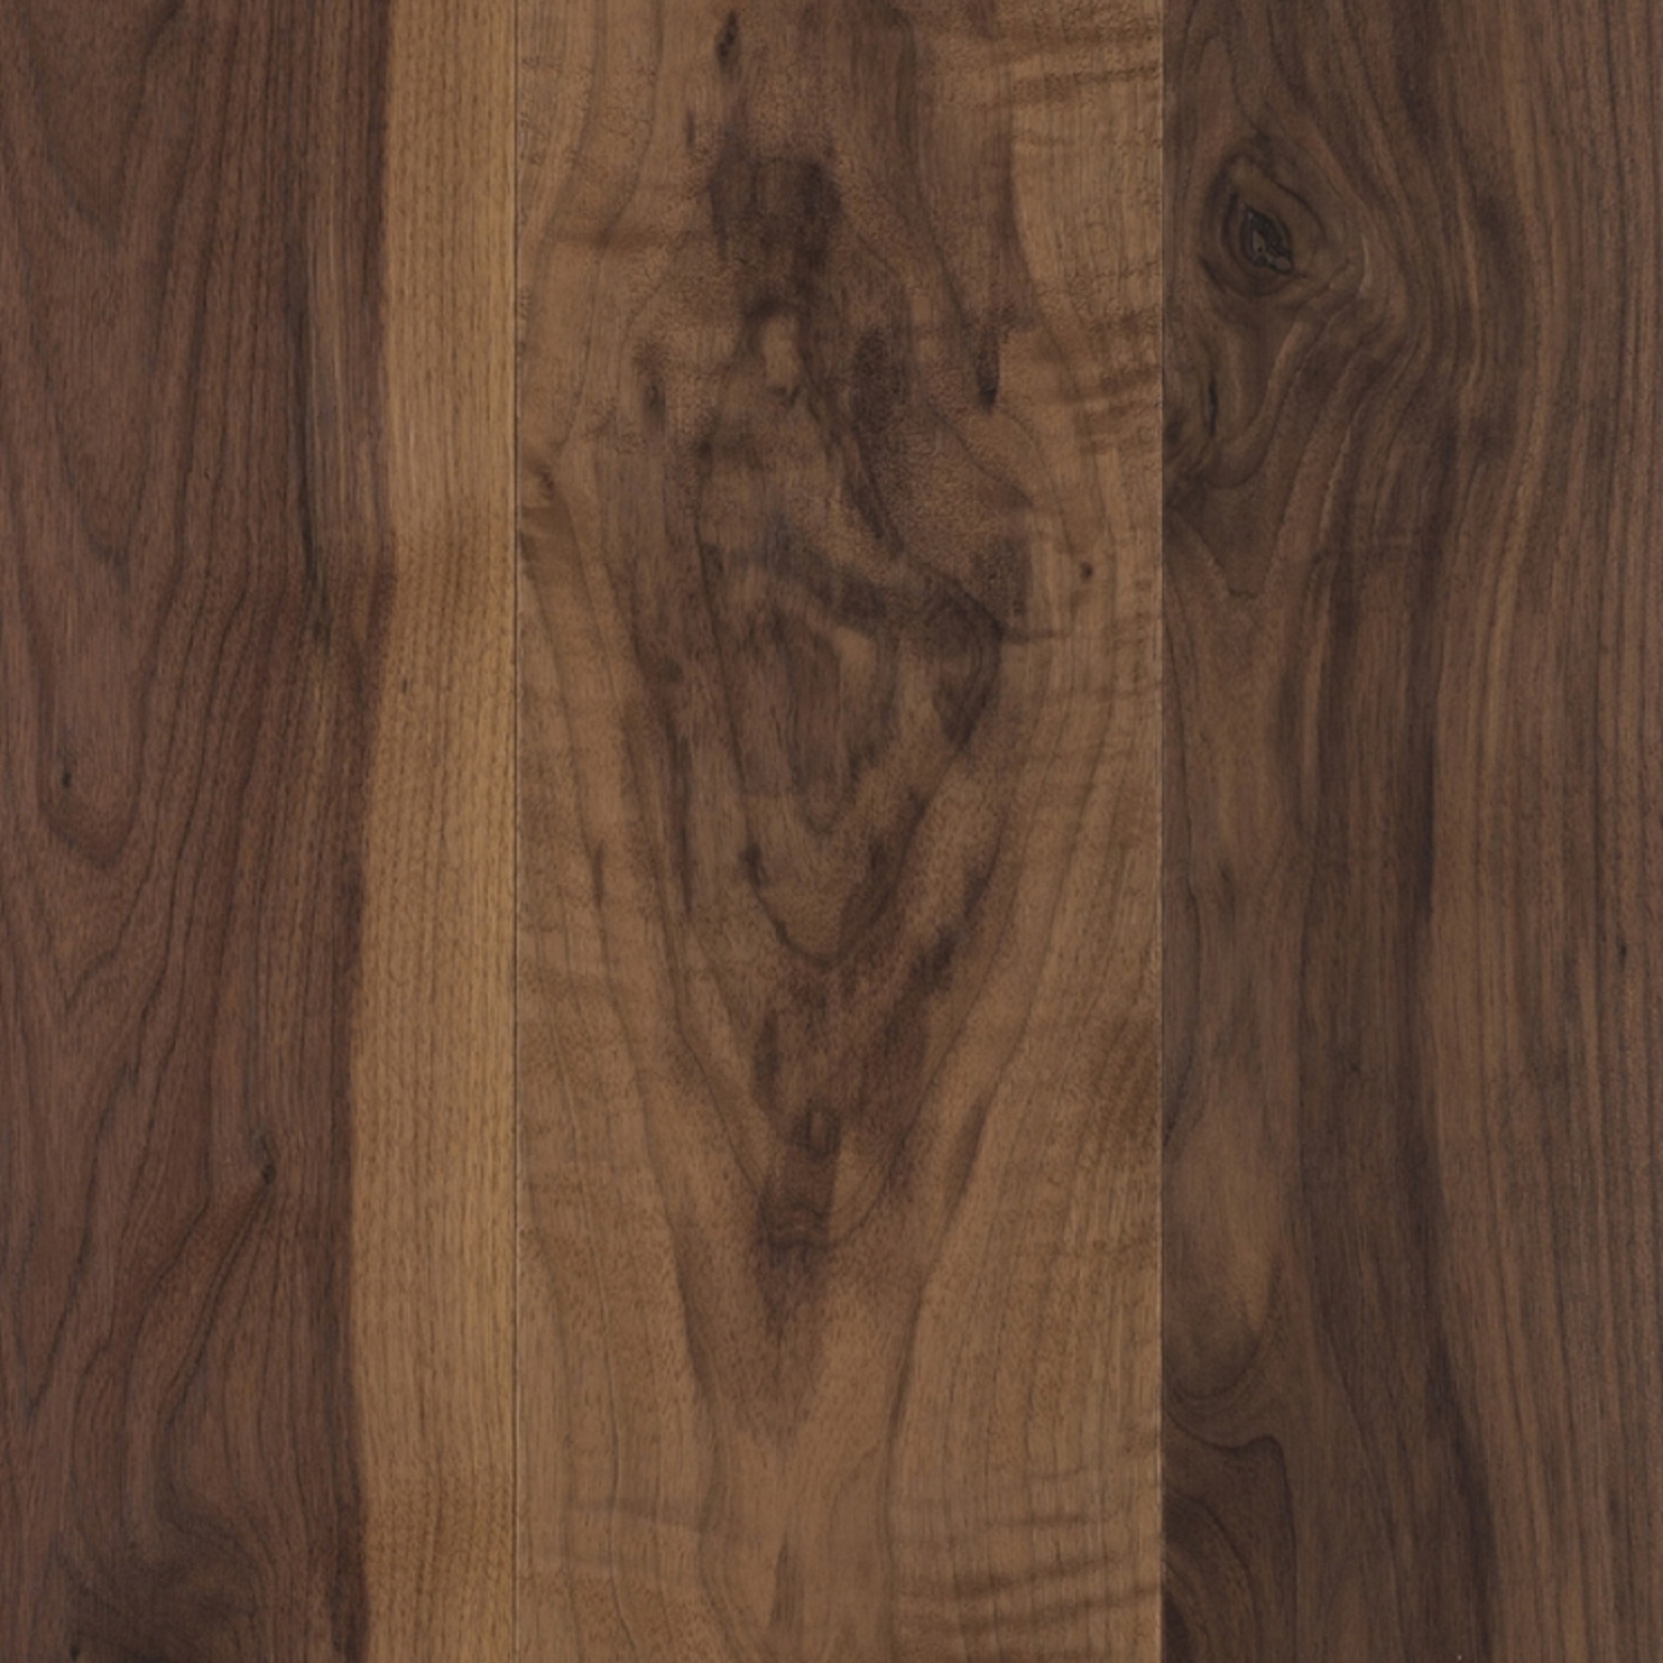 Mardegan Legno Natural Wood American, American Walnut Hardwood Flooring Reviews